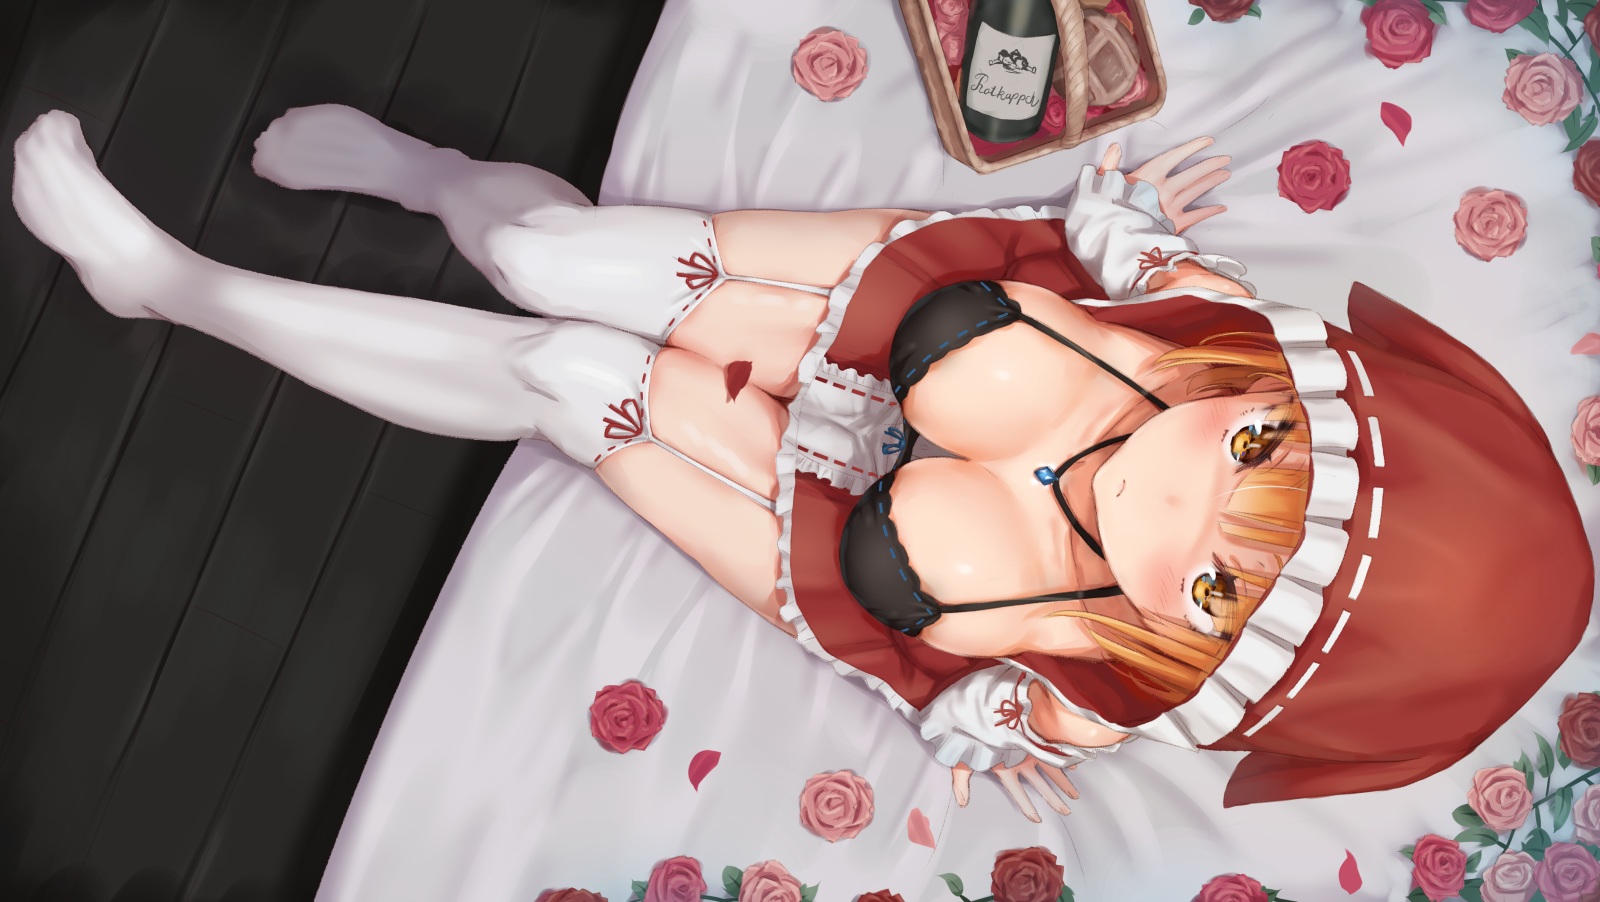 Anime 1600x902 anime girls artwork stockings underwear redhead rose drink flowers blushing bra hoods cleavage